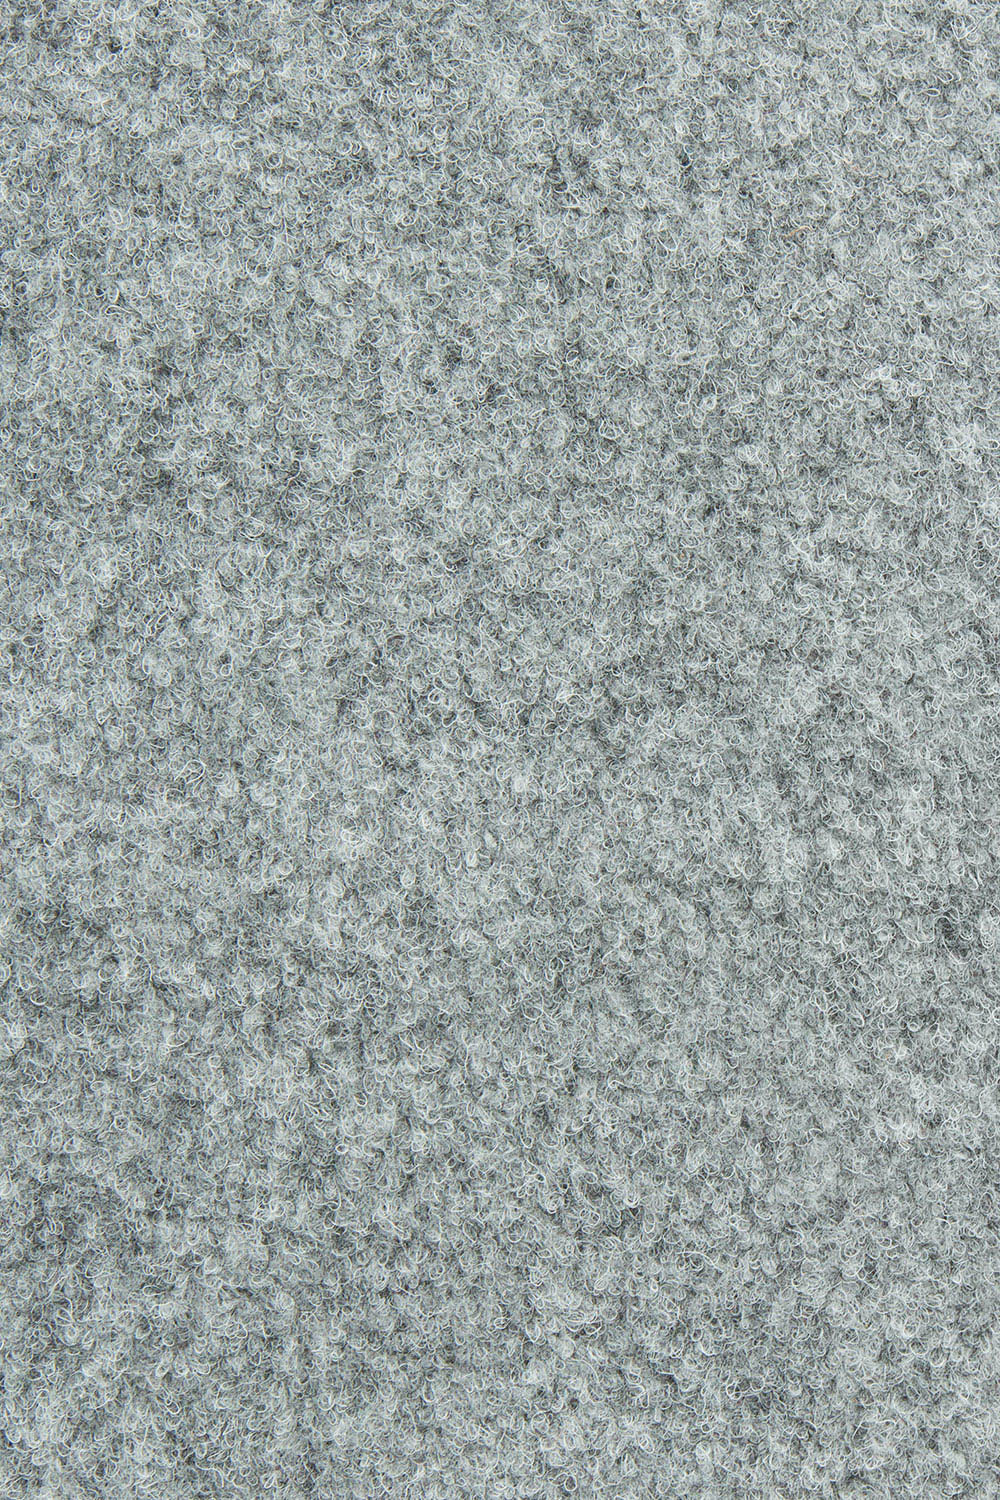 Metrážový koberec Zero LF 14 400 cm